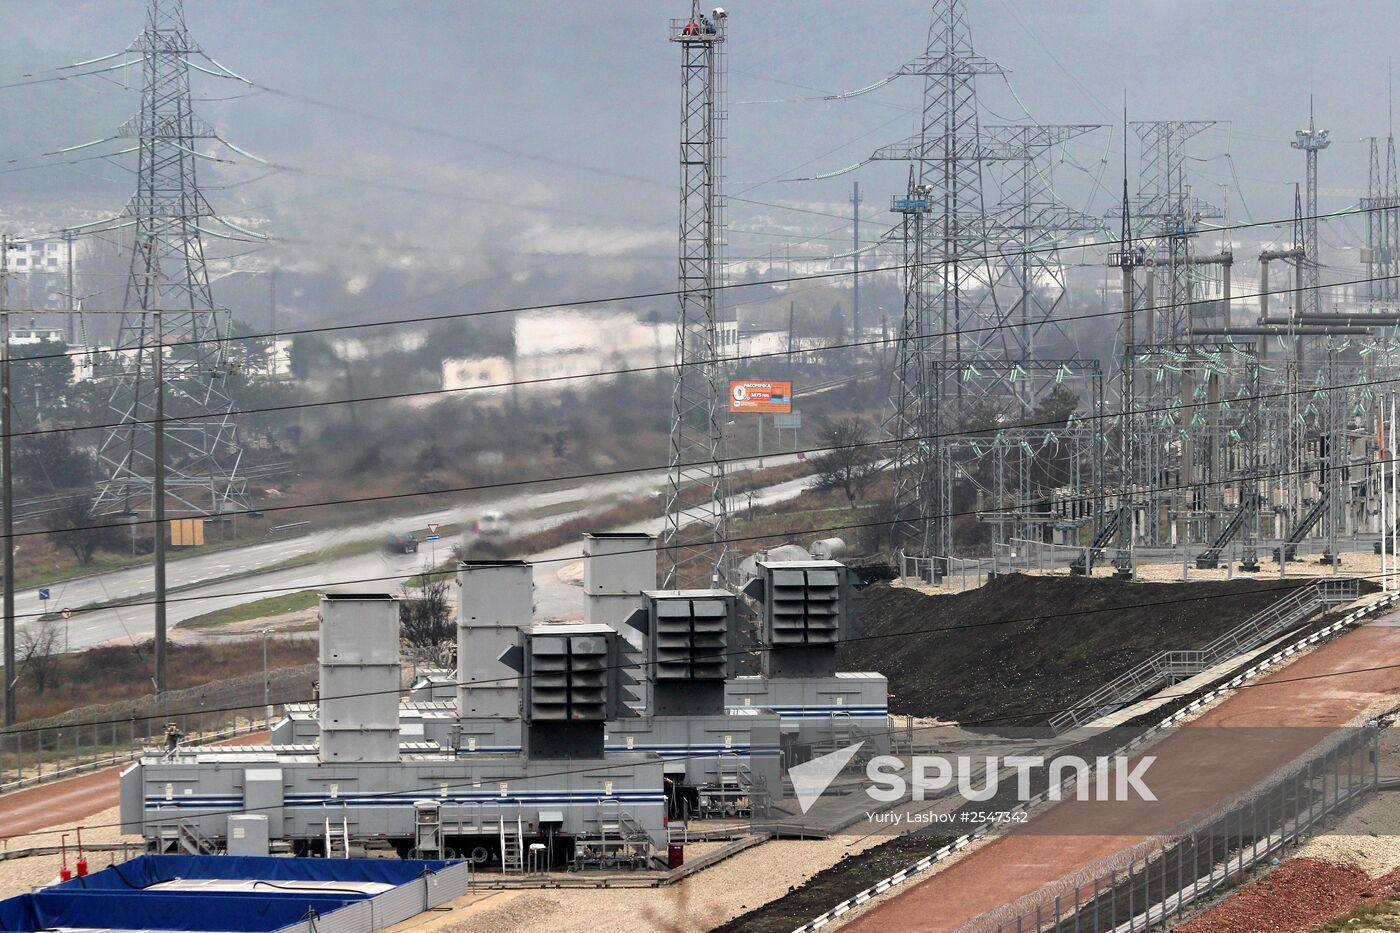 Mobile gas turbine power plants in Sevastopol